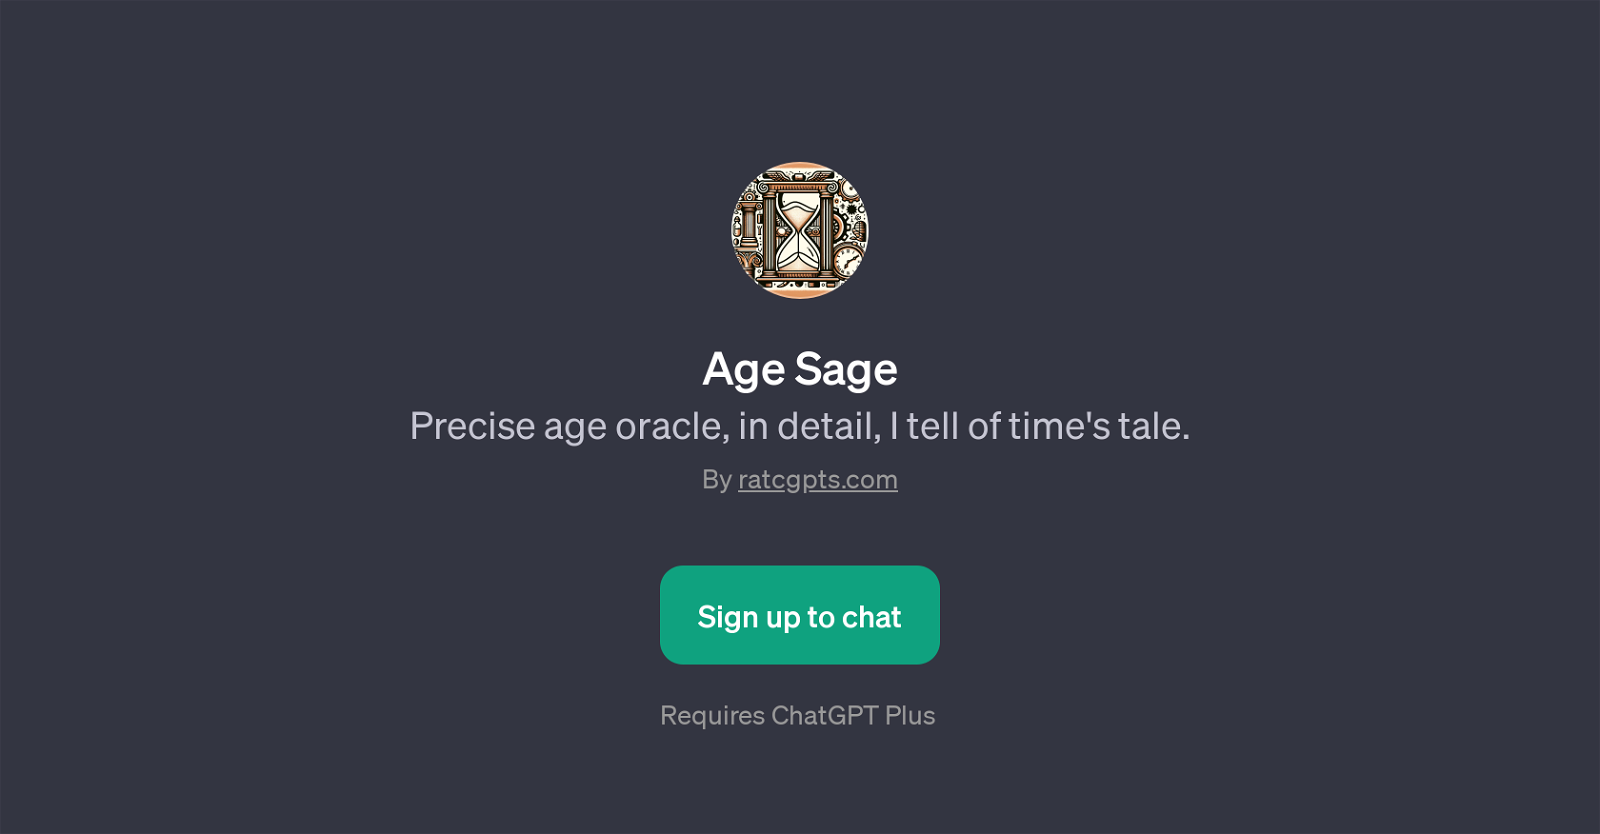 Age Sage website